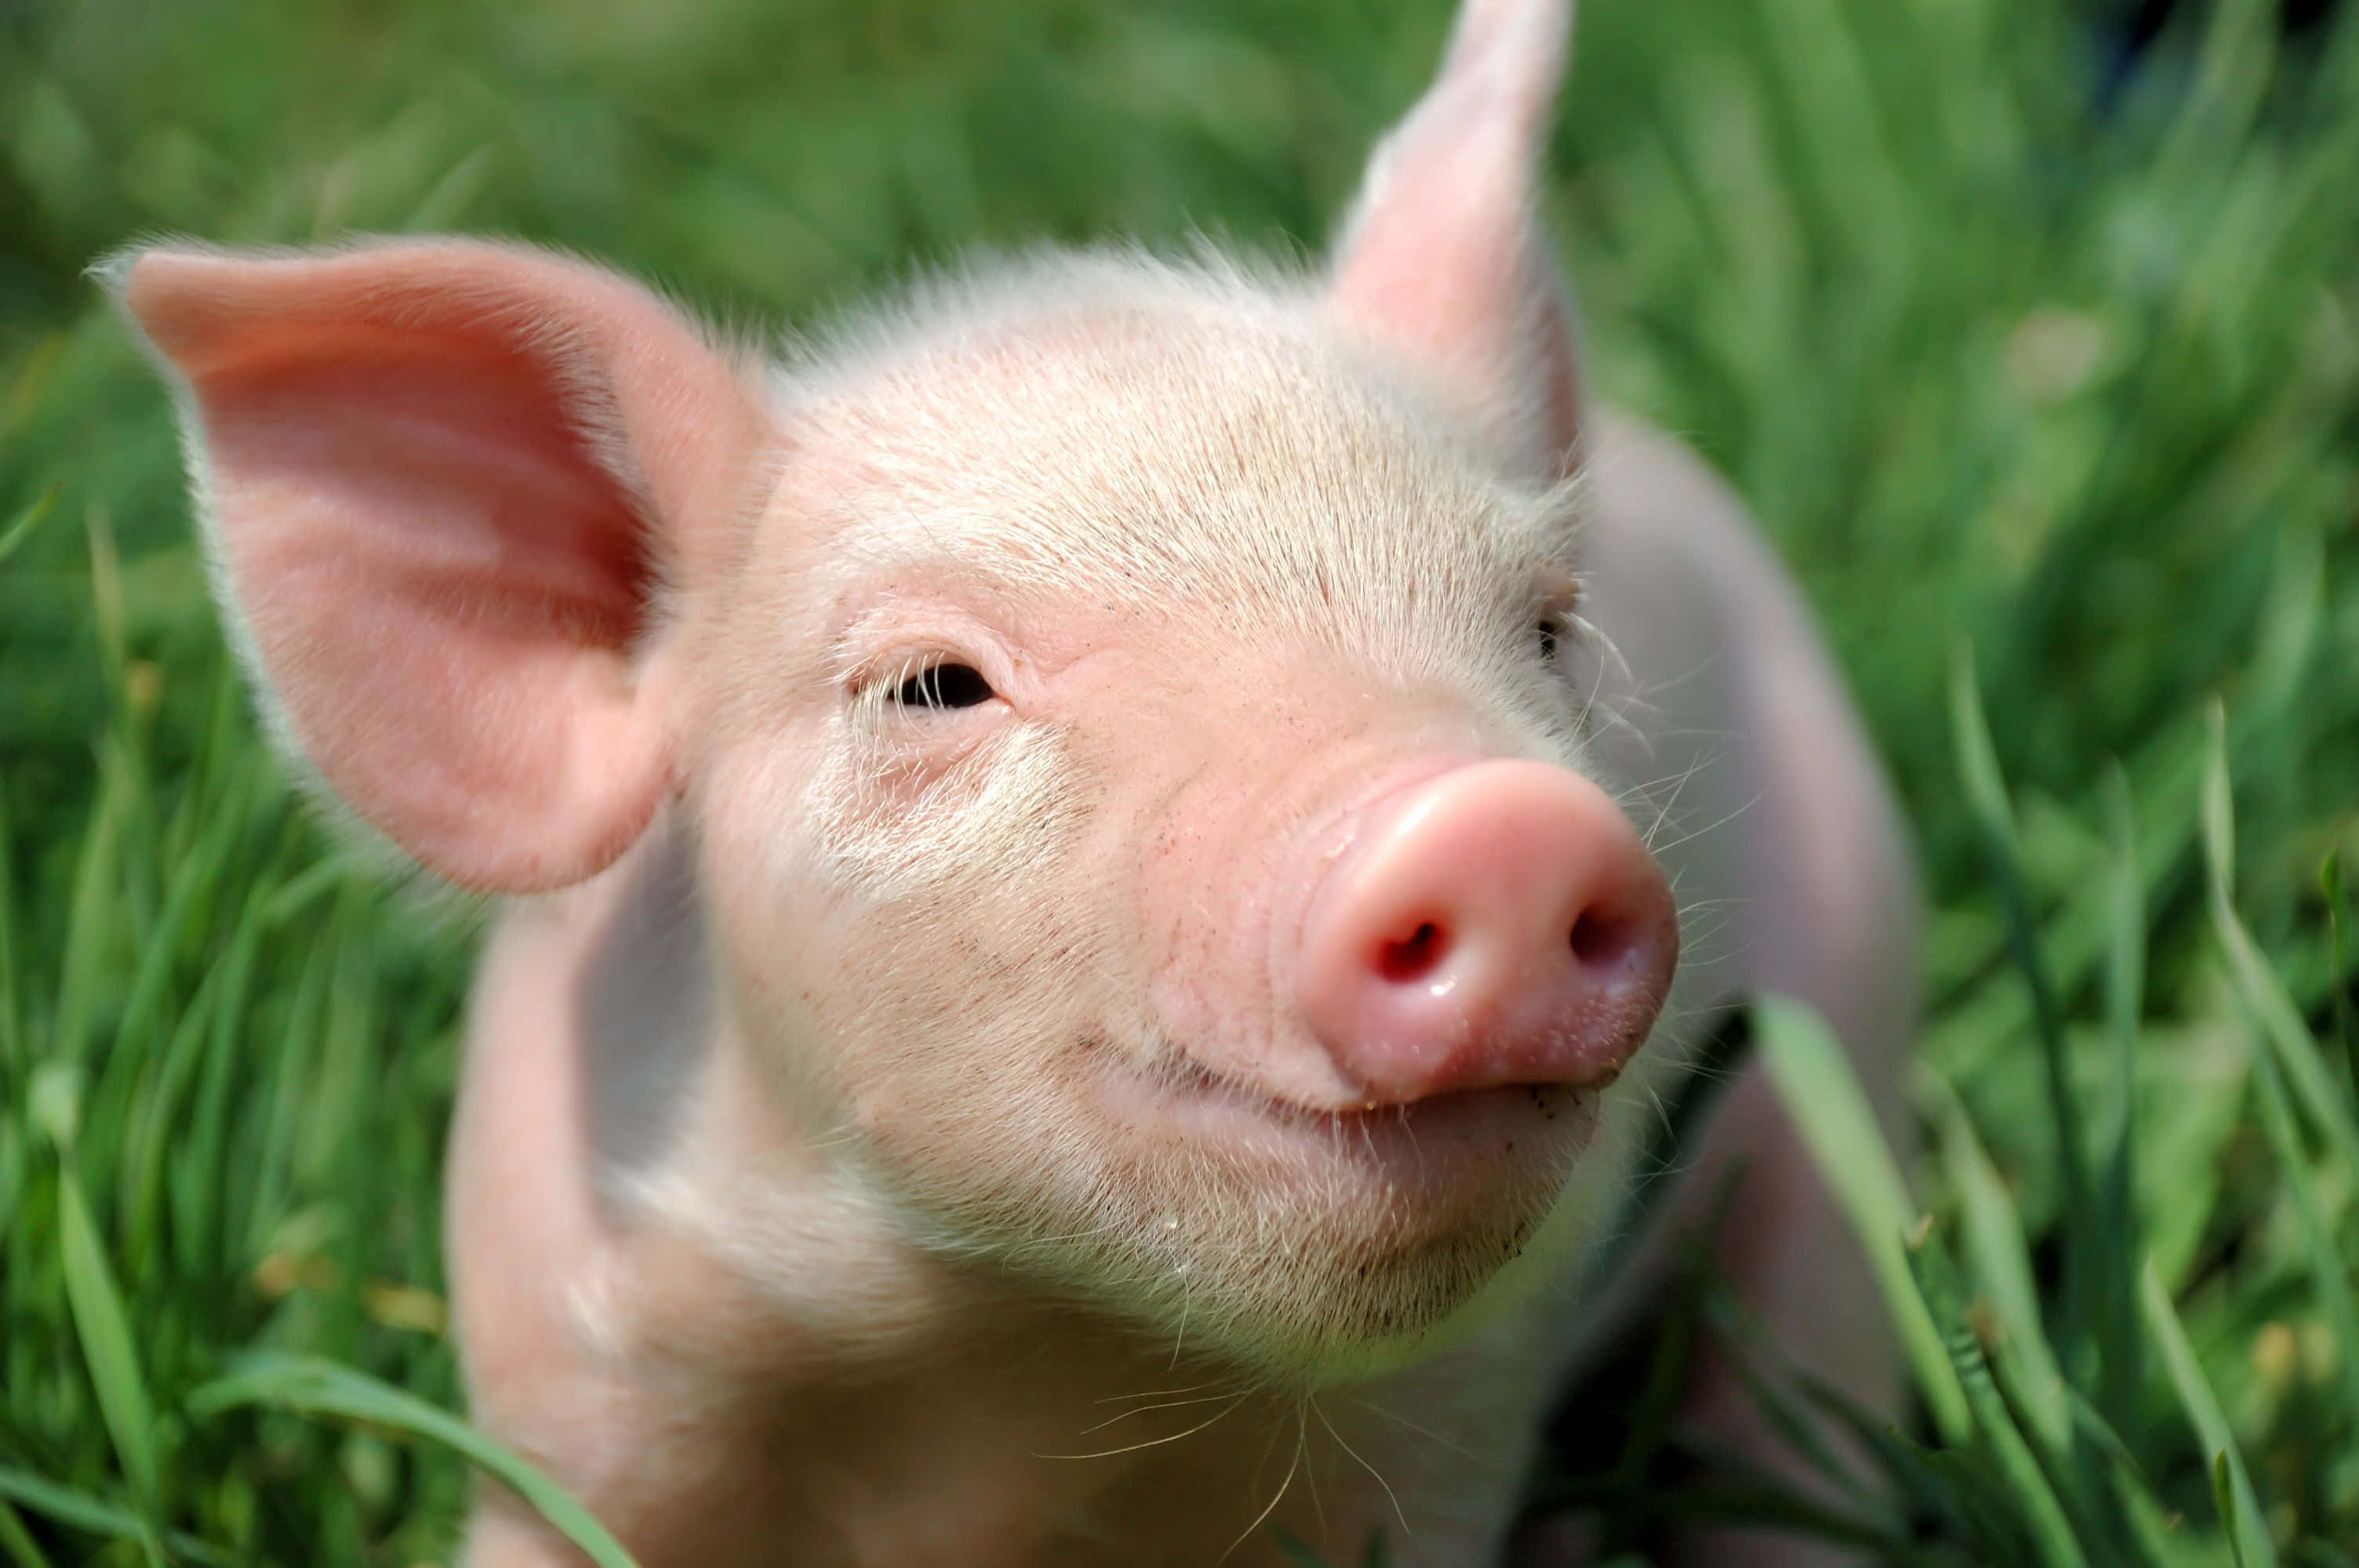 A happy pink pig enjoying the sun